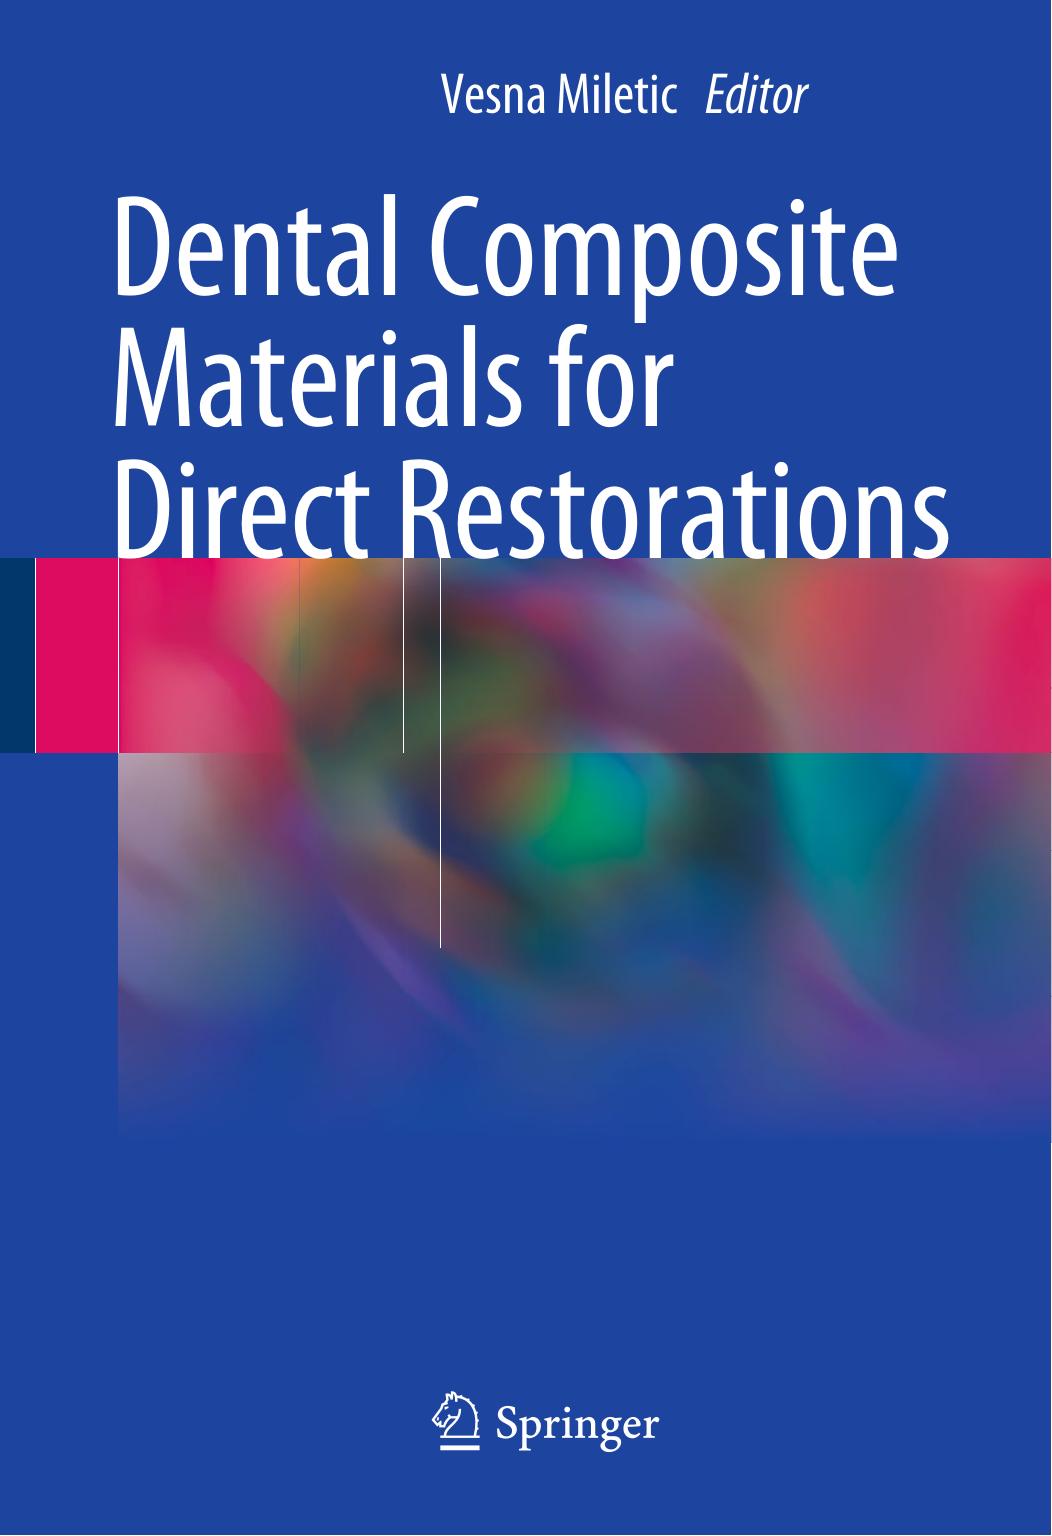 Dental Composite Materials for Direct Restorations, 2018